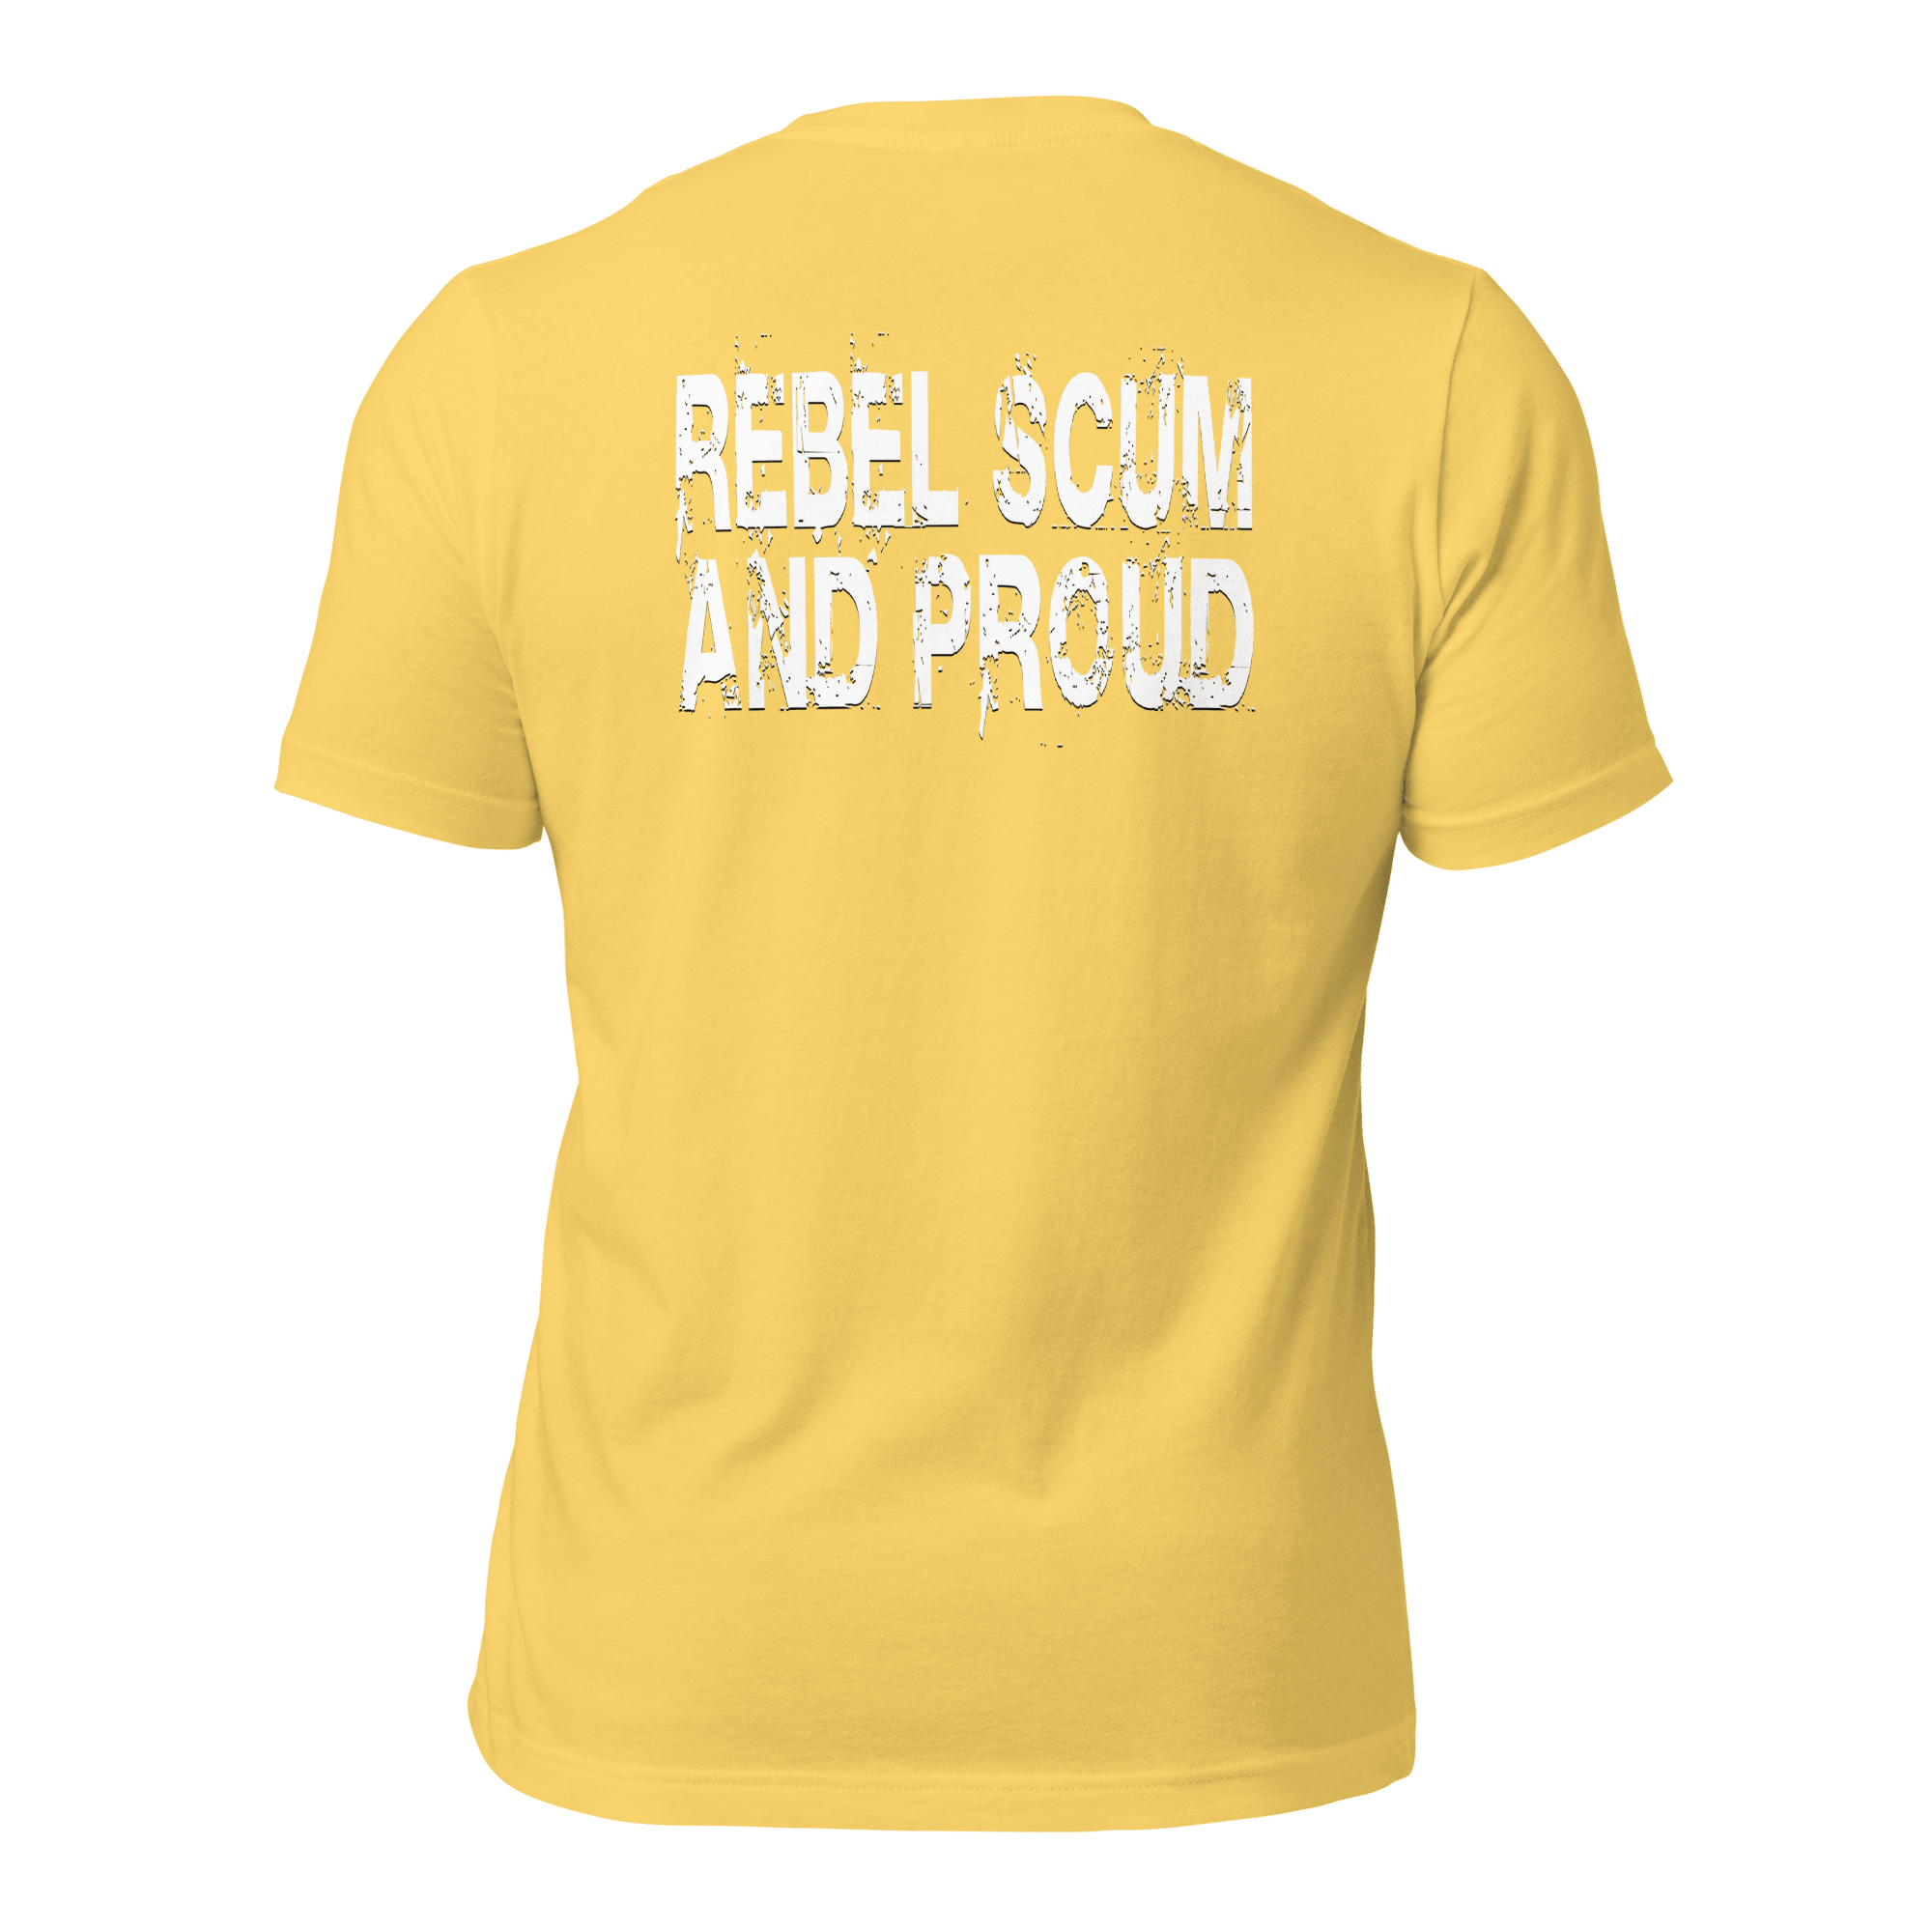 Rebel Scum and Proud Unisex t-shirt (BACK)